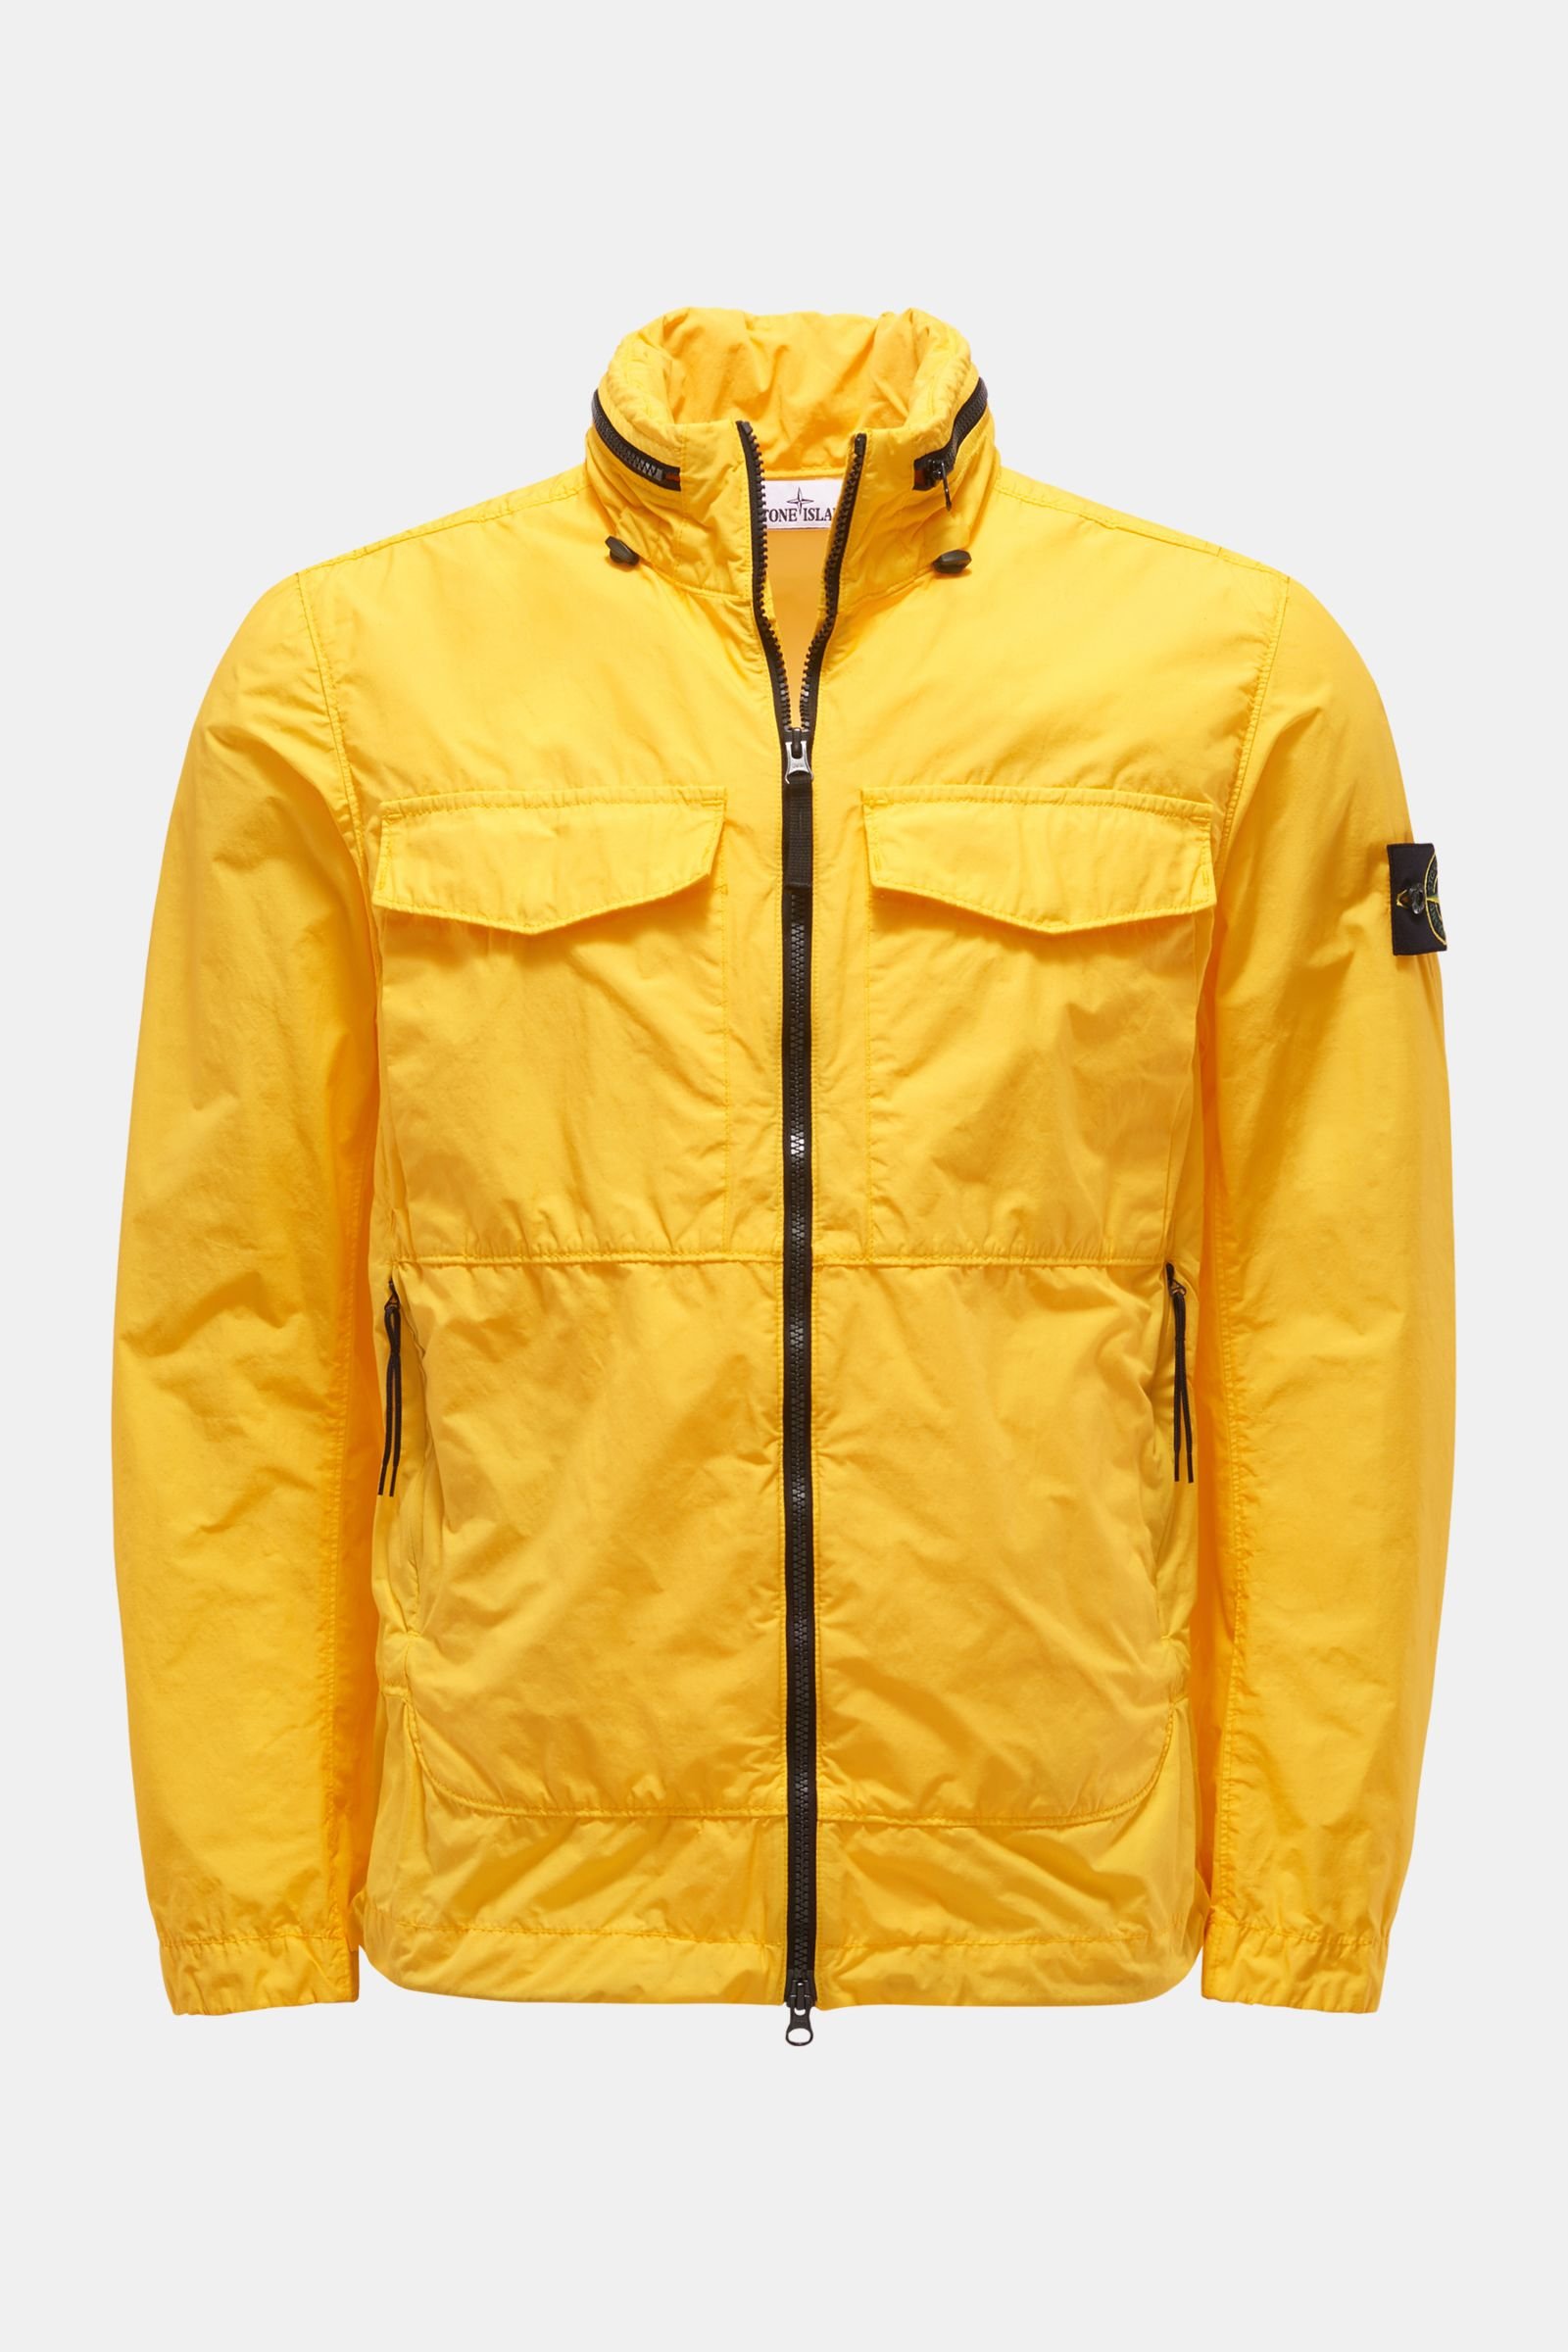 STONE ISLAND jacket 'Naslan Light Watro' yellow | BRAUN Hamburg